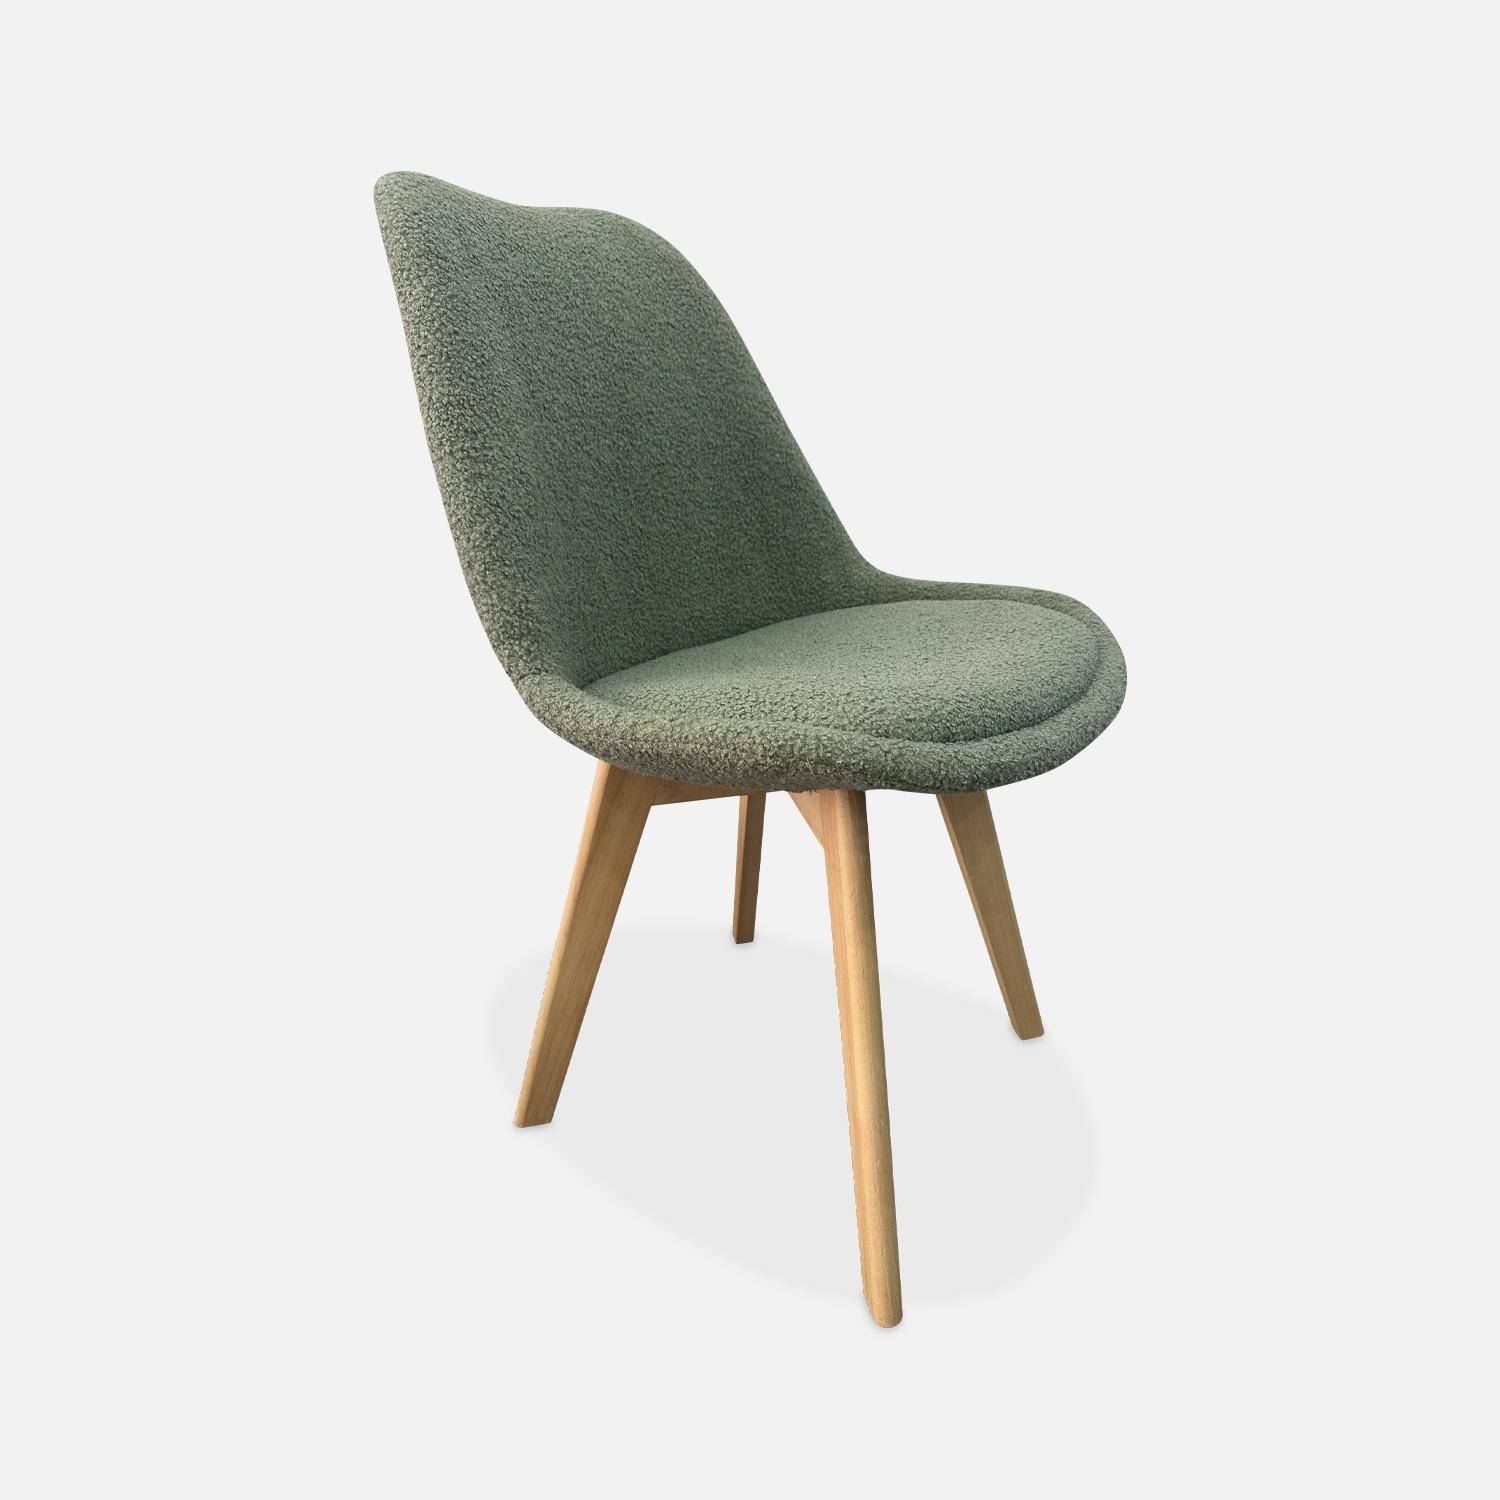 4er Set skandinavische Stühle mit blaßgrünem Bouclé-Bezug und Buchenholzbeinen - NILS ,sweeek,Photo2